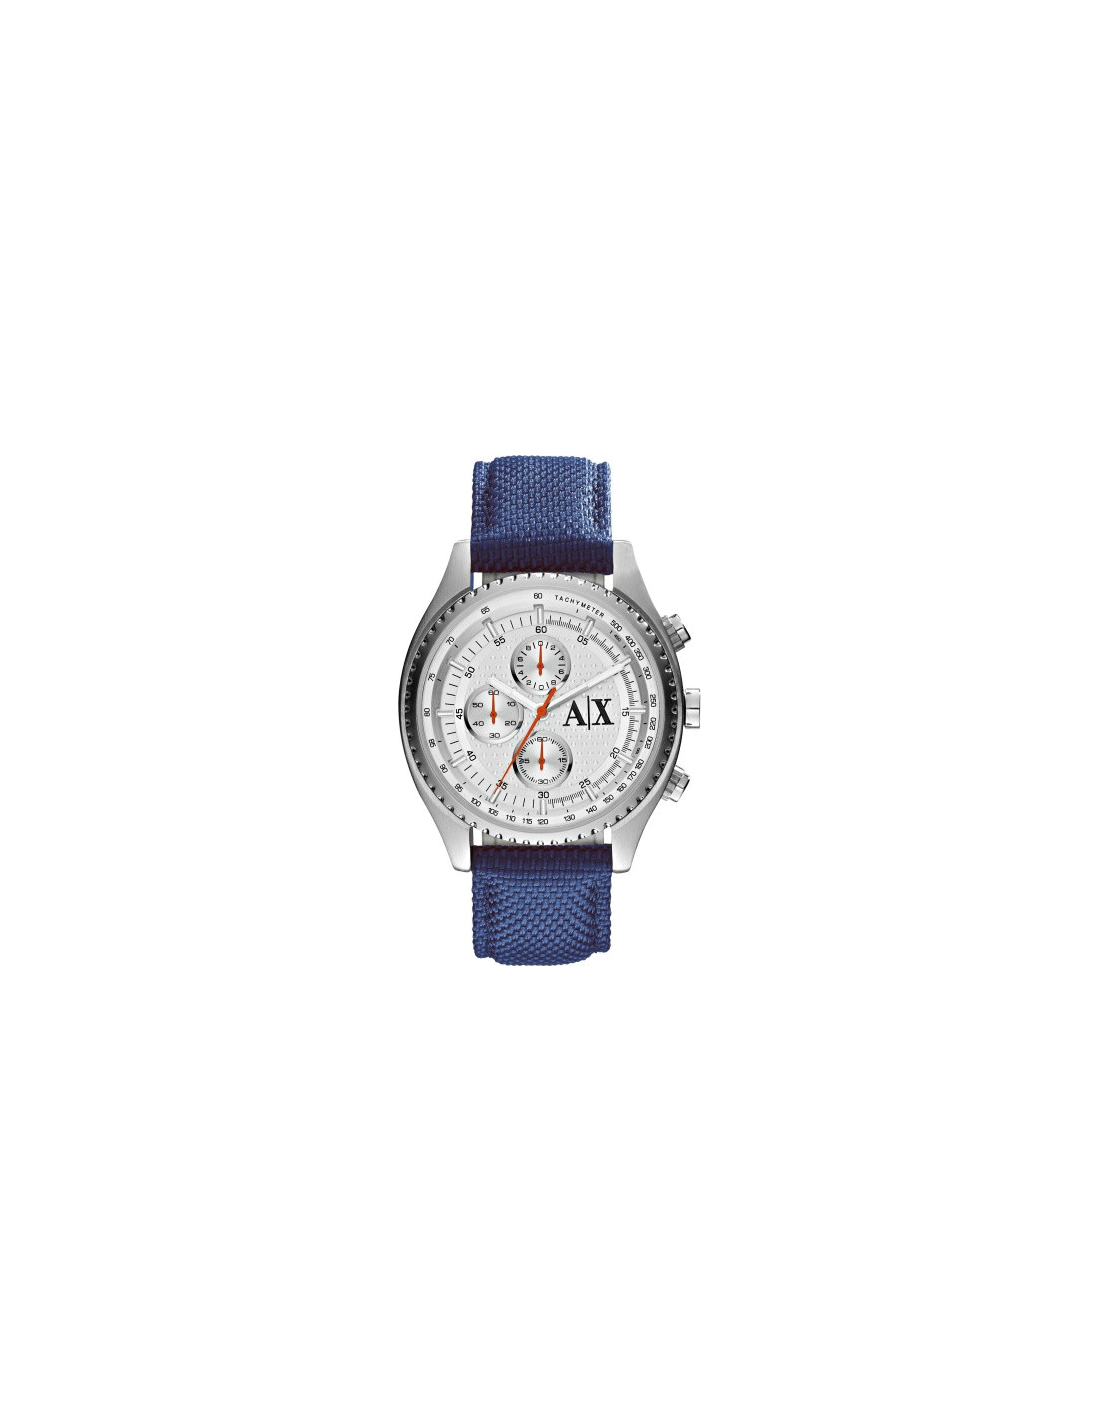 Armani Exchange AX1609 men's watch at 189,00 € Authorized Vendor